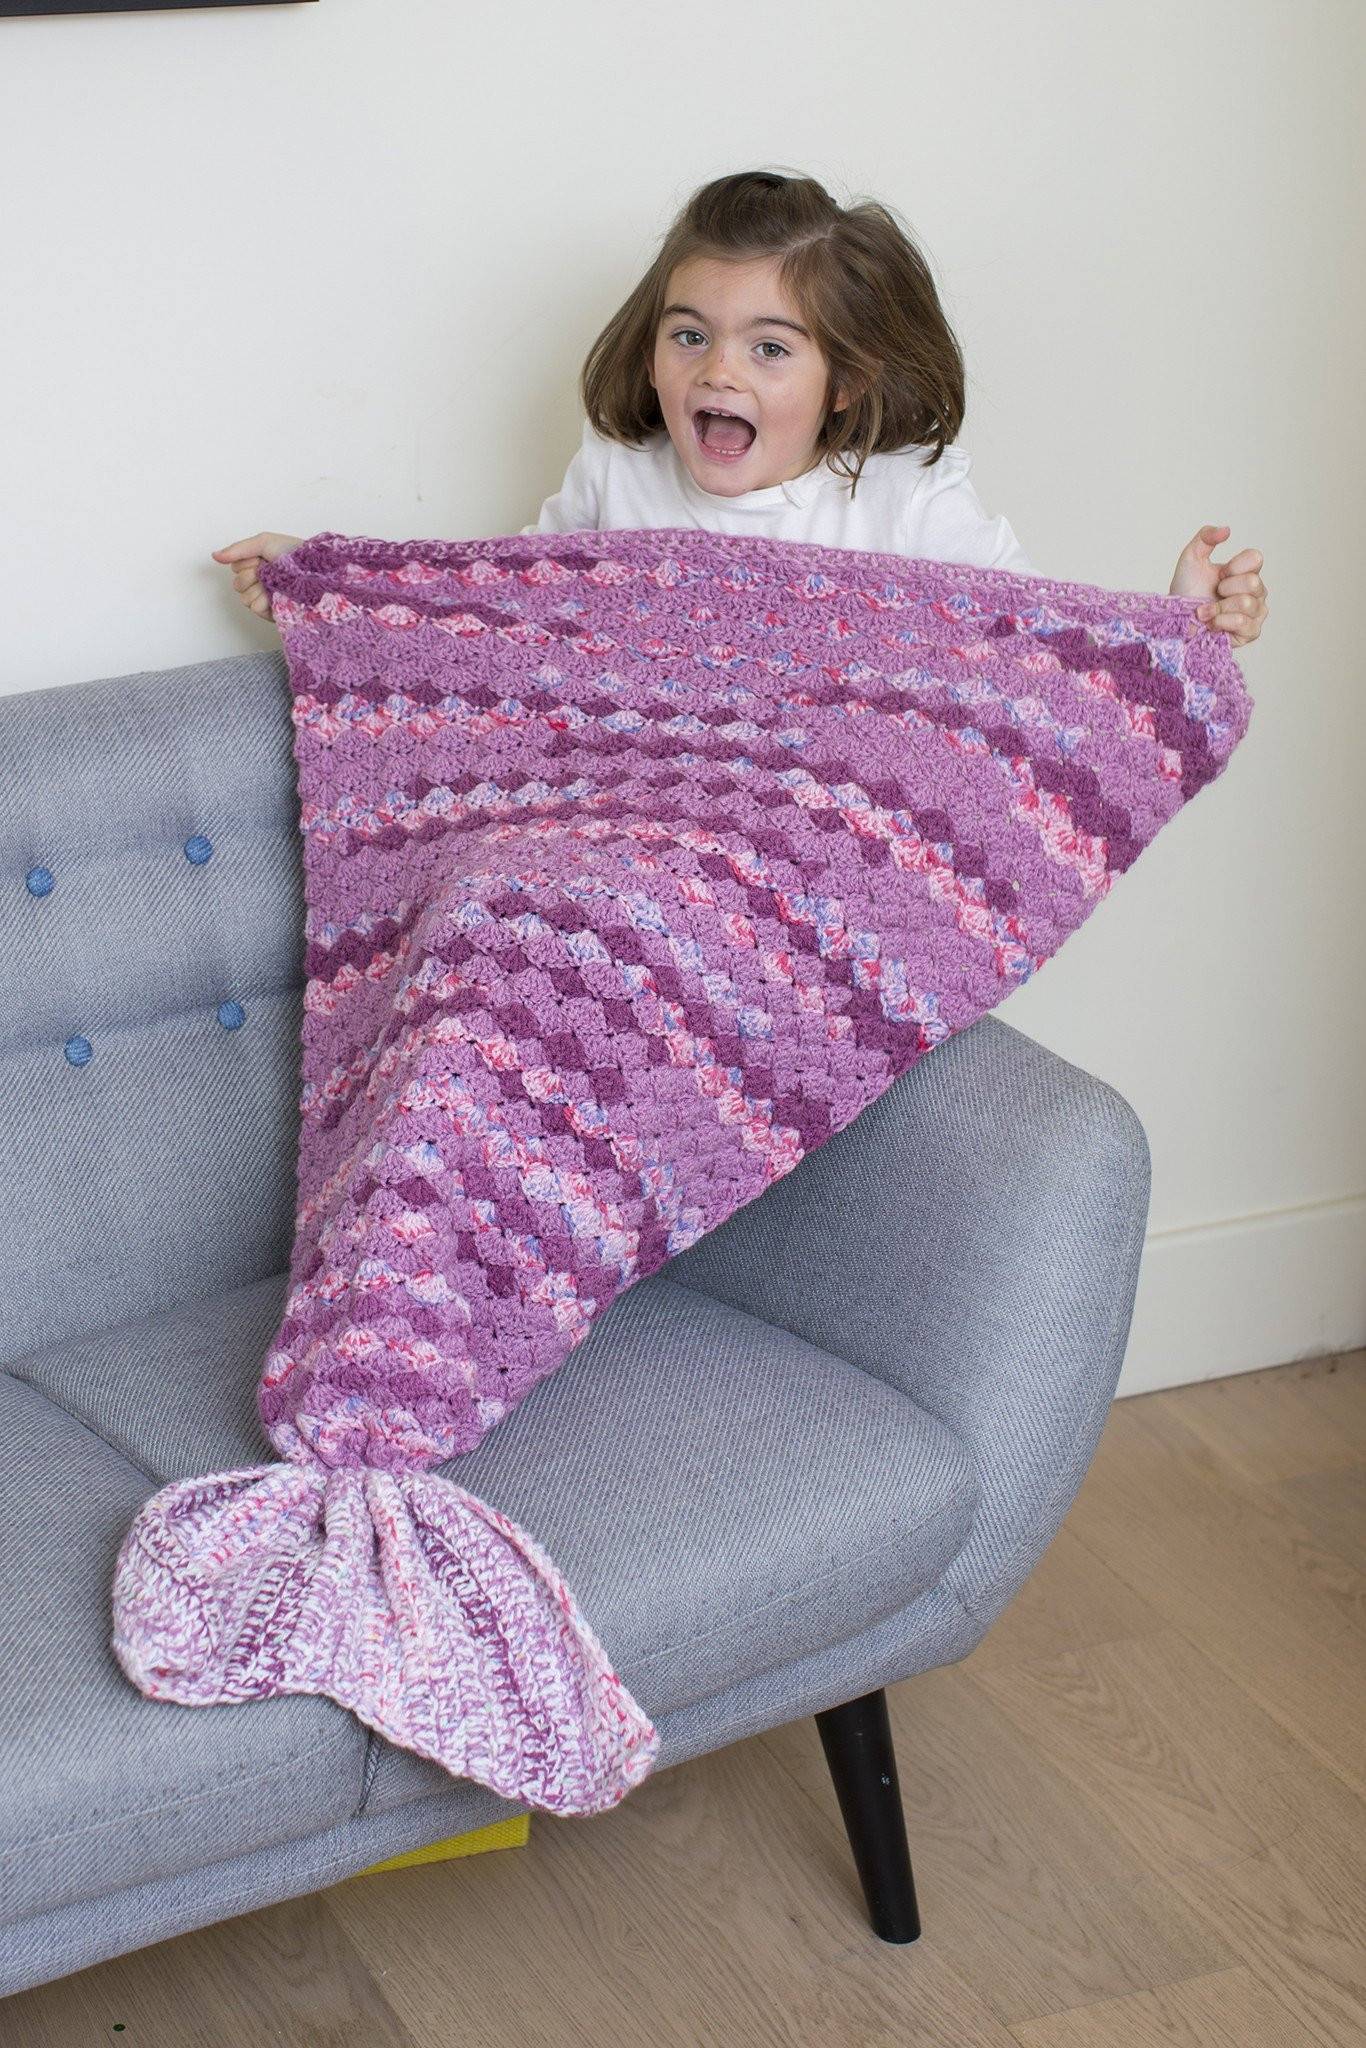 Kids Mermaid Tail Blanket Crochet Pattern The Knitting Network